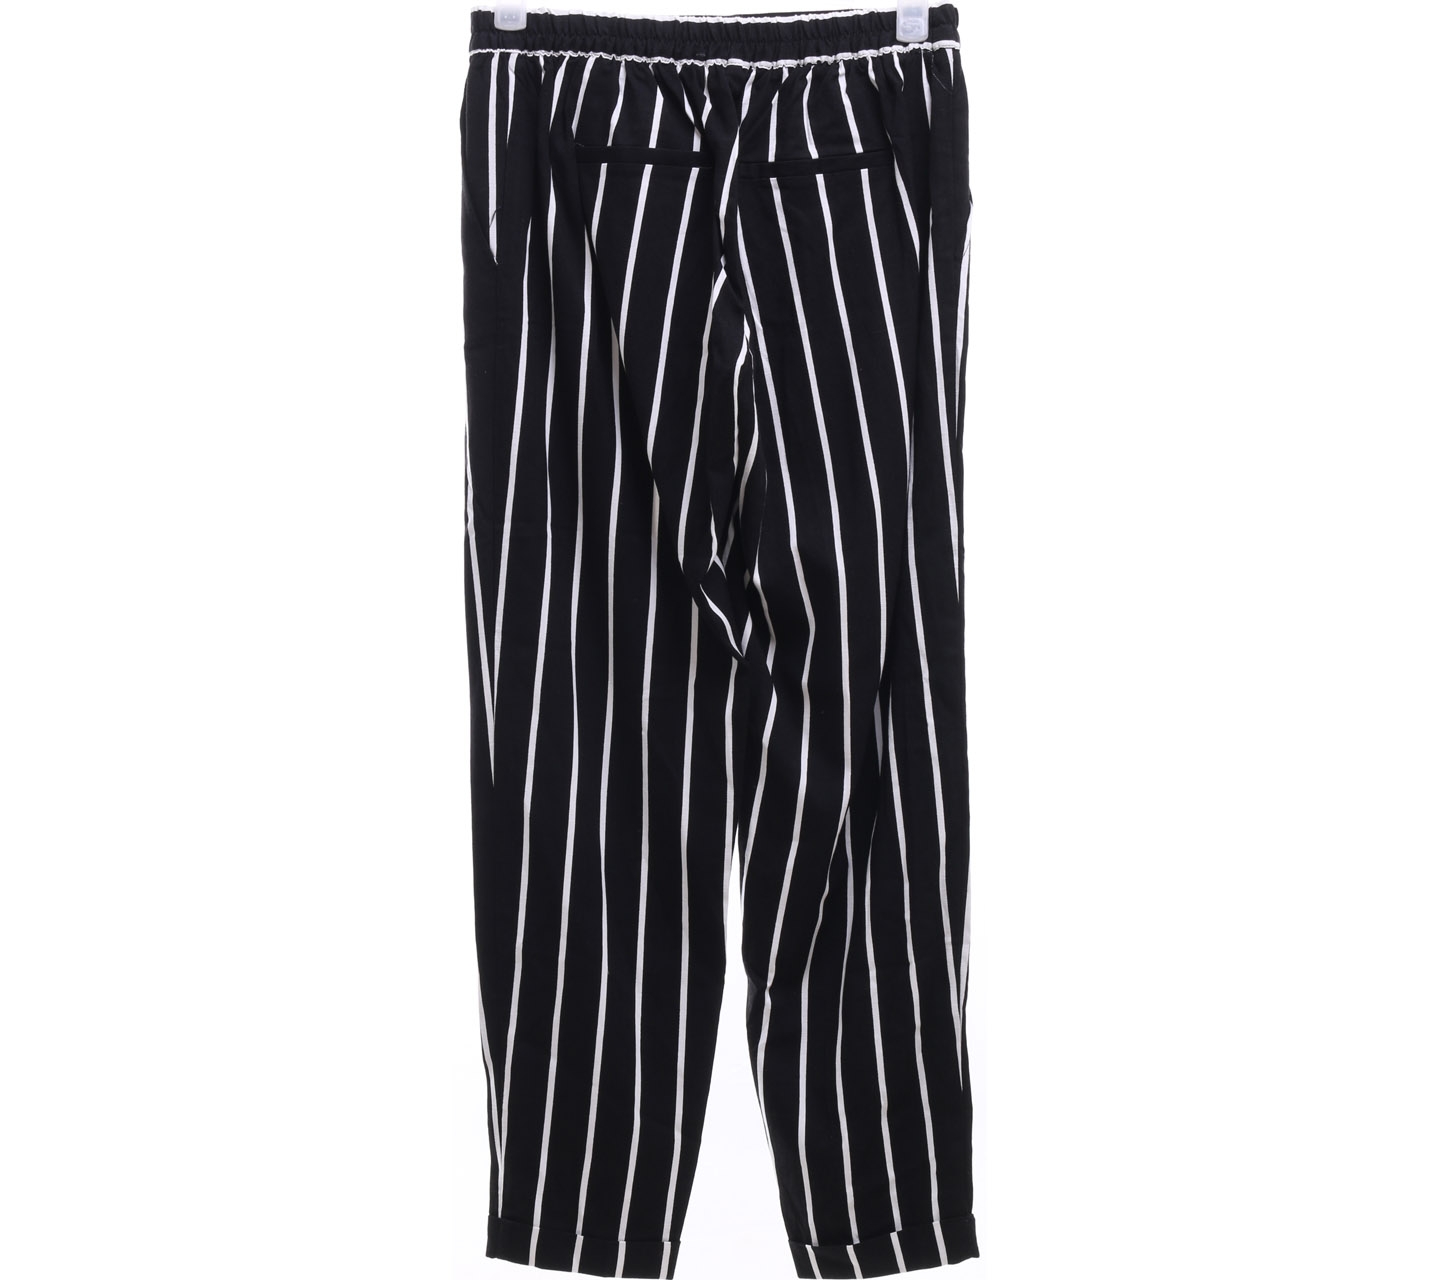 Bershka Stripes Black White Long Pants